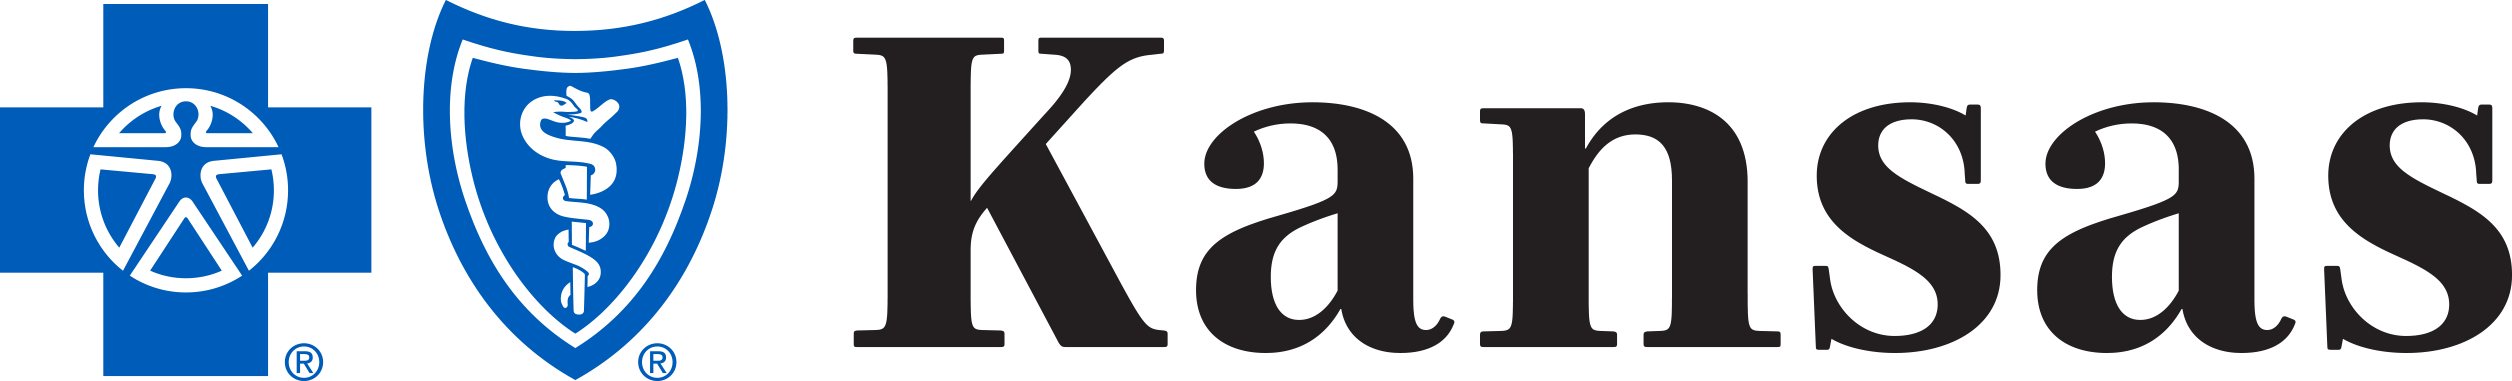 Blue Cross and Blue Shield of Kansas logo